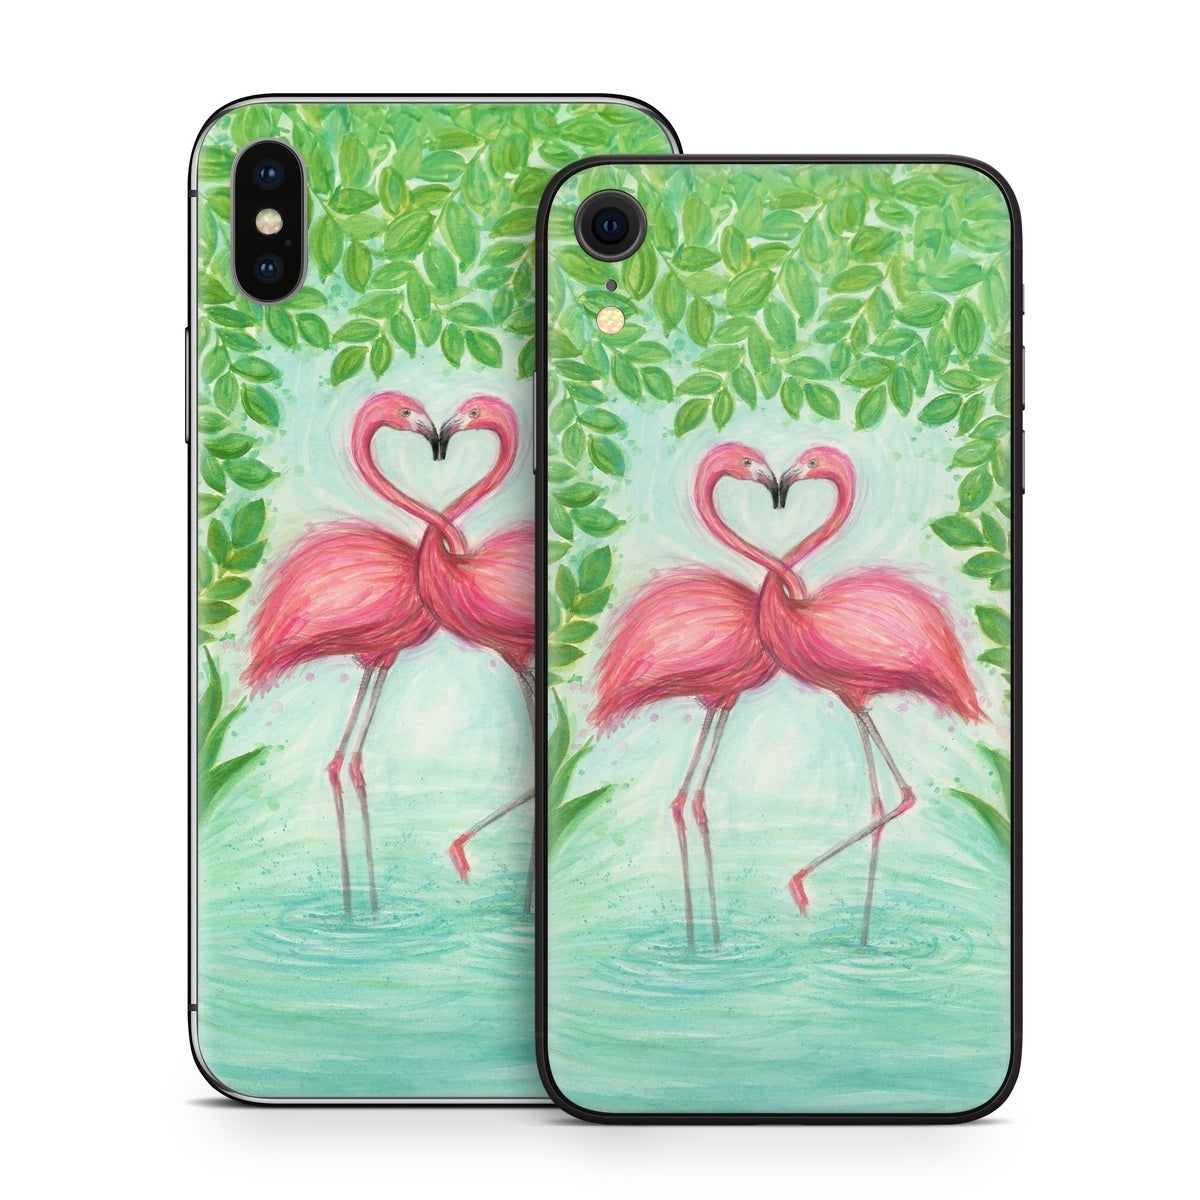 Flamingo Love - Apple iPhone X Skin